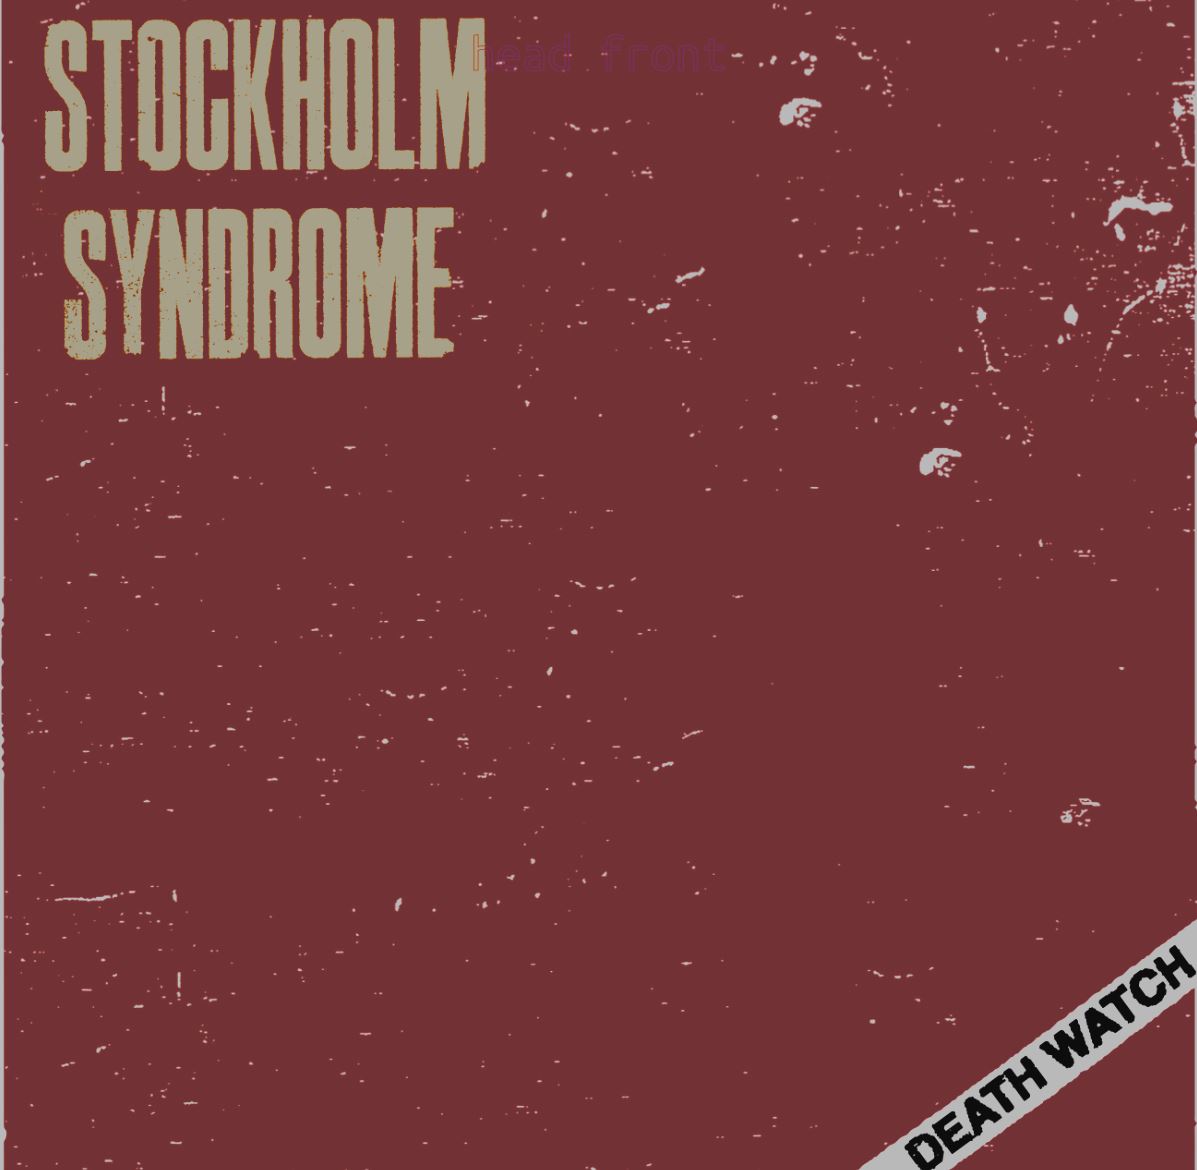 Stockholm Syndrome - Death Watch LP (black vinyl) [PREORDER]